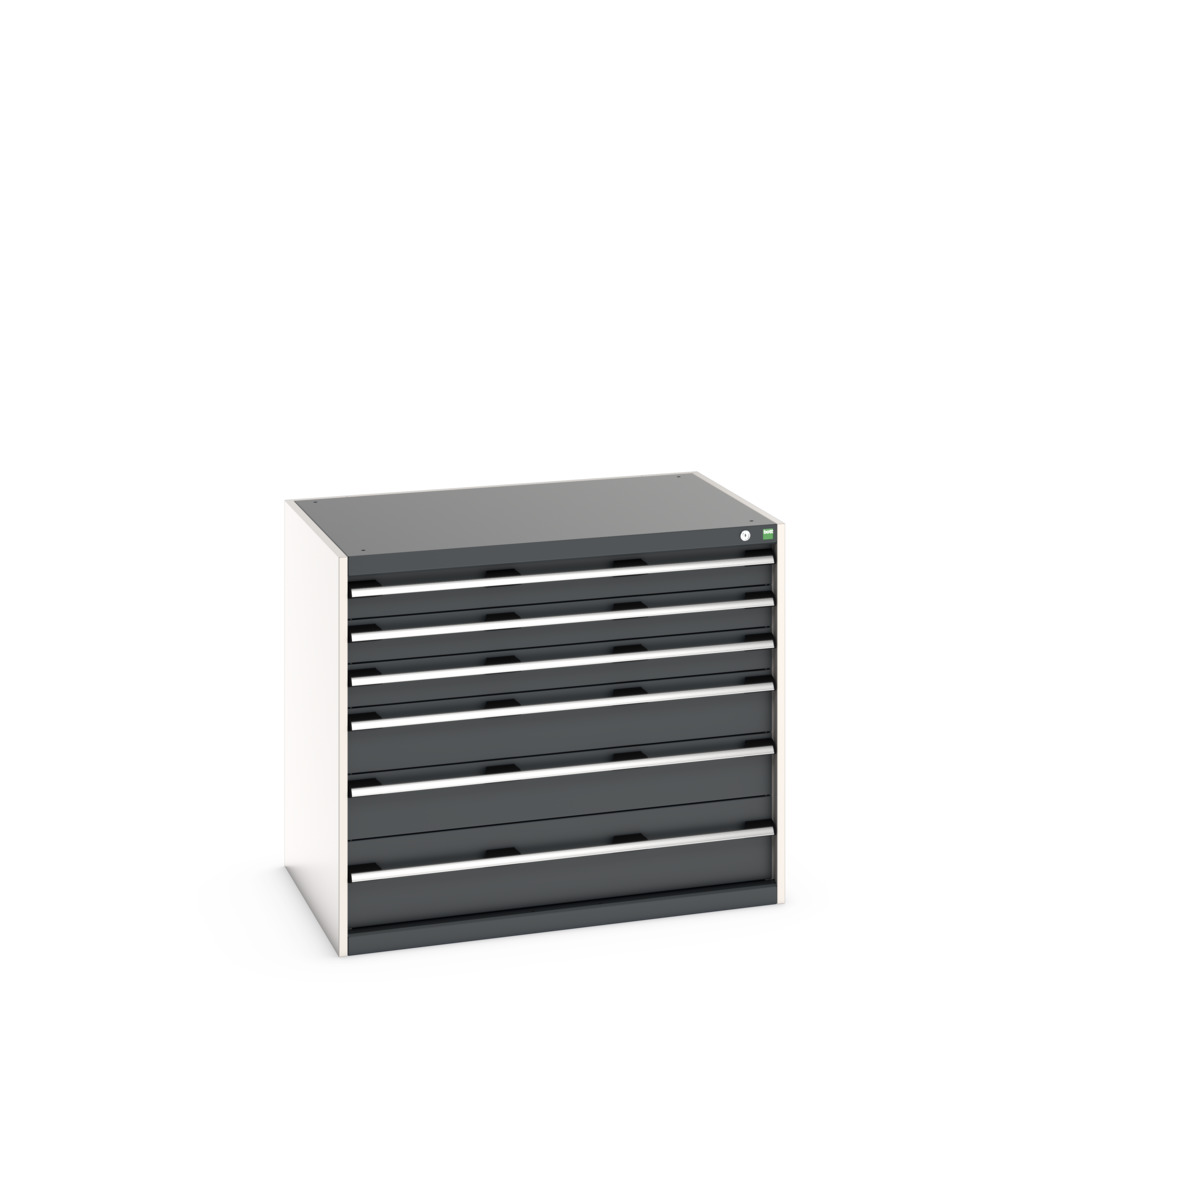 40029103. - cubio drawer cabinet